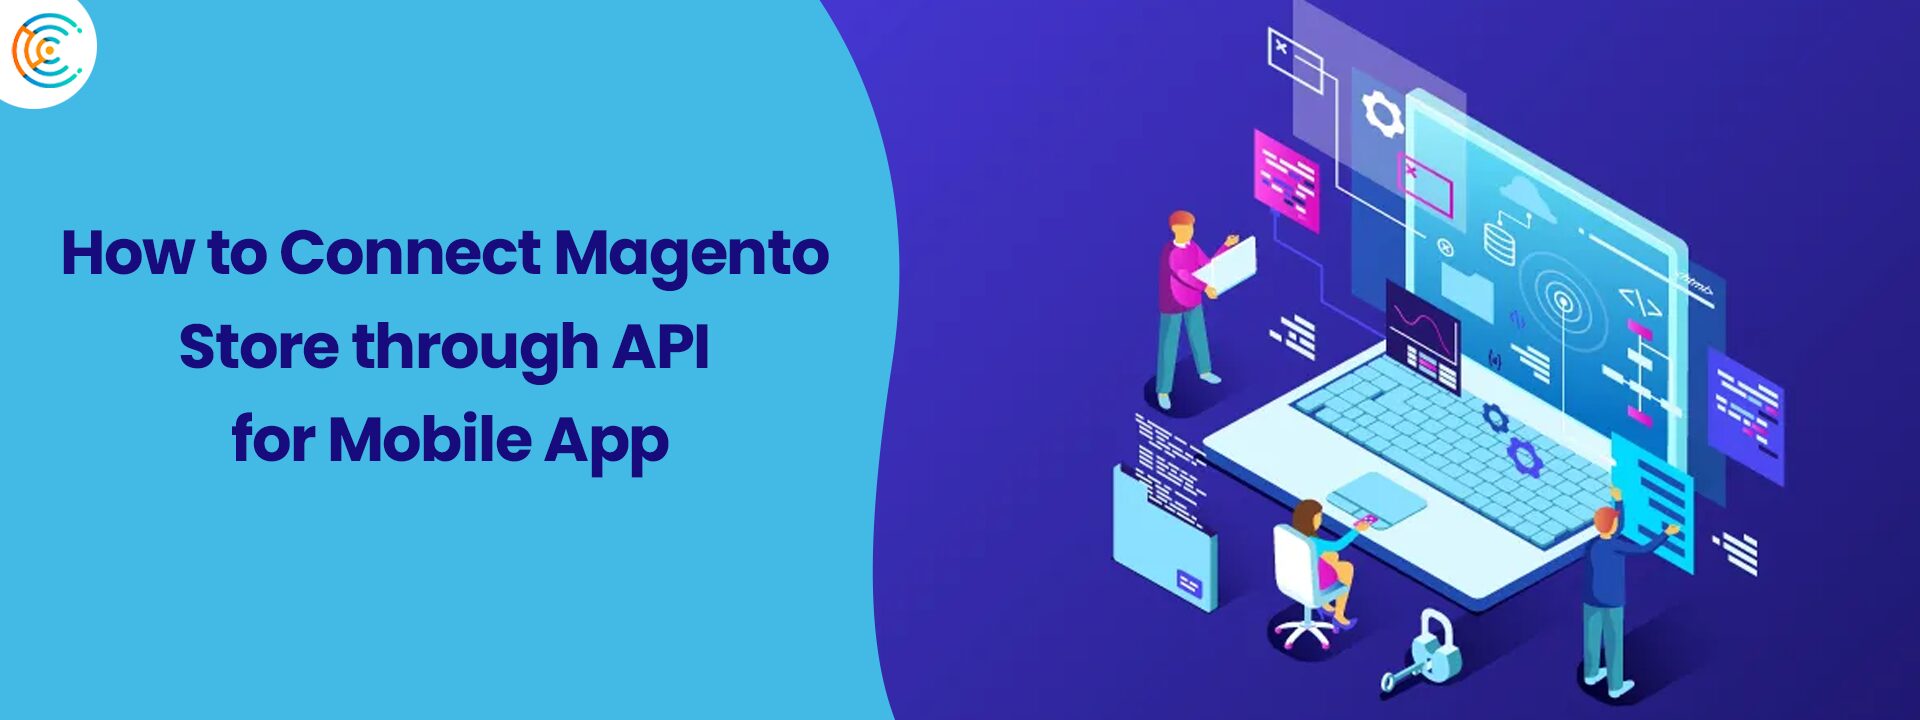 How to Connect Magento Store through API for Mobile App